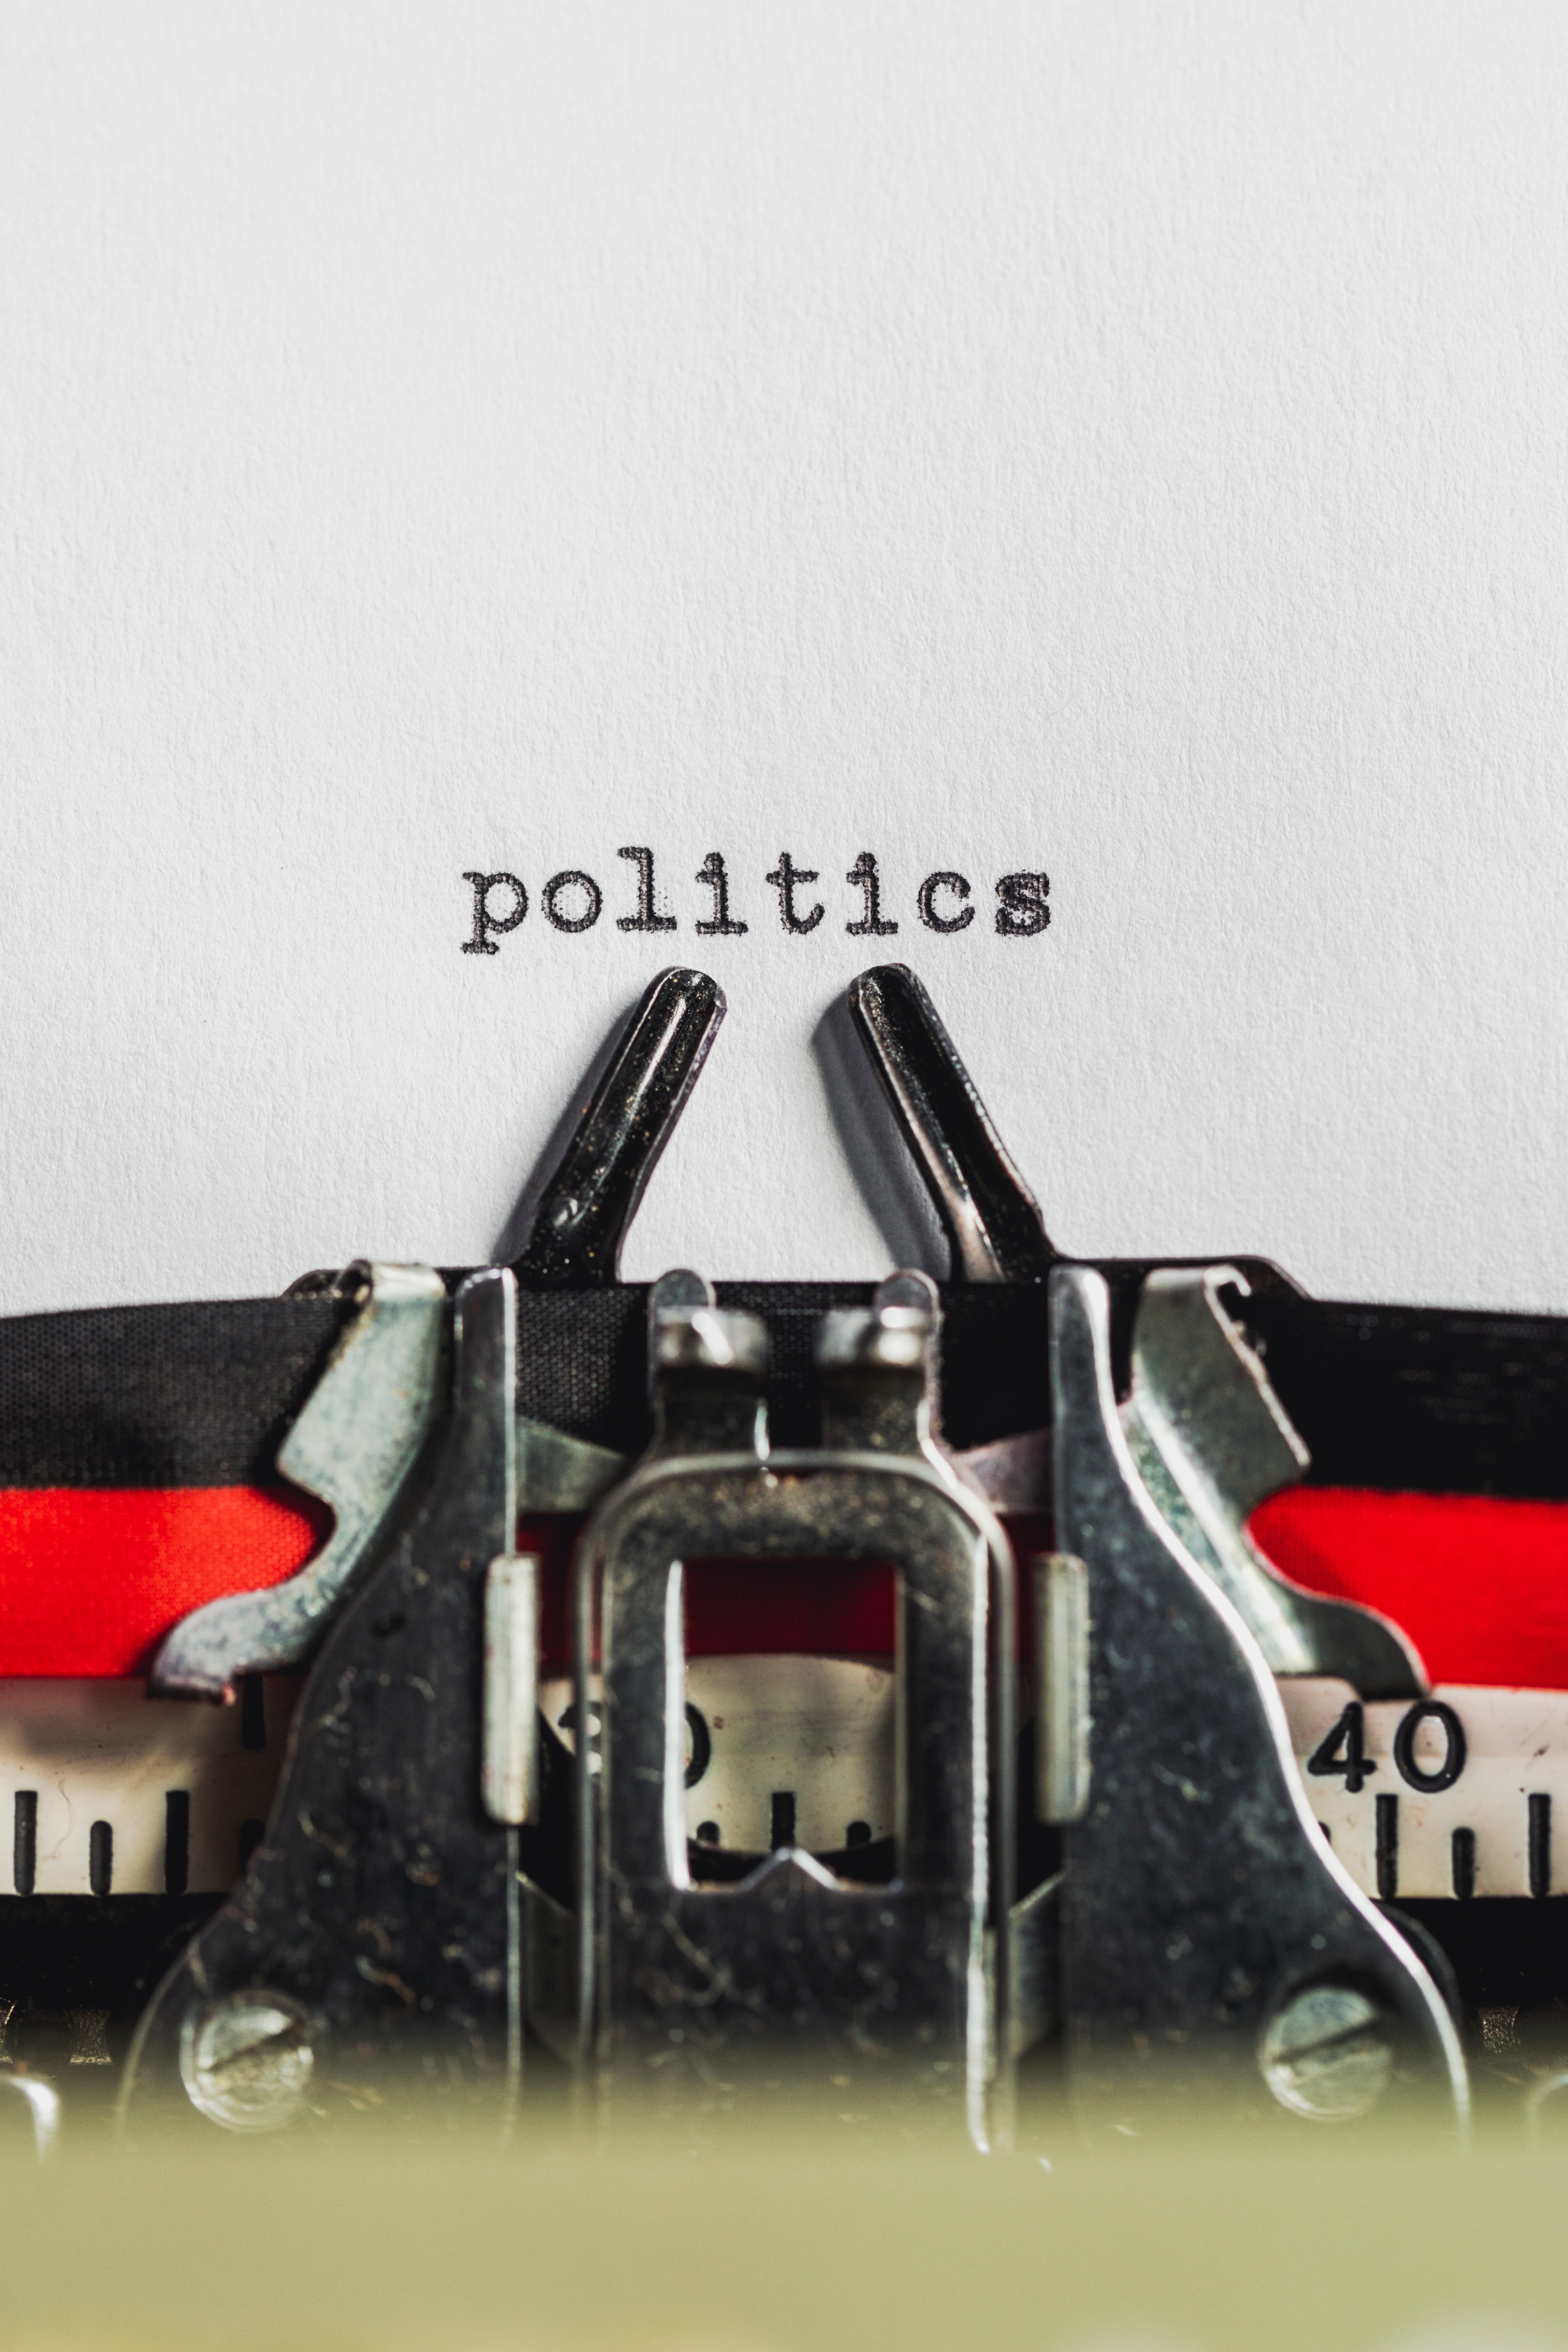 48+] Politics Wallpaper - WallpaperSafari